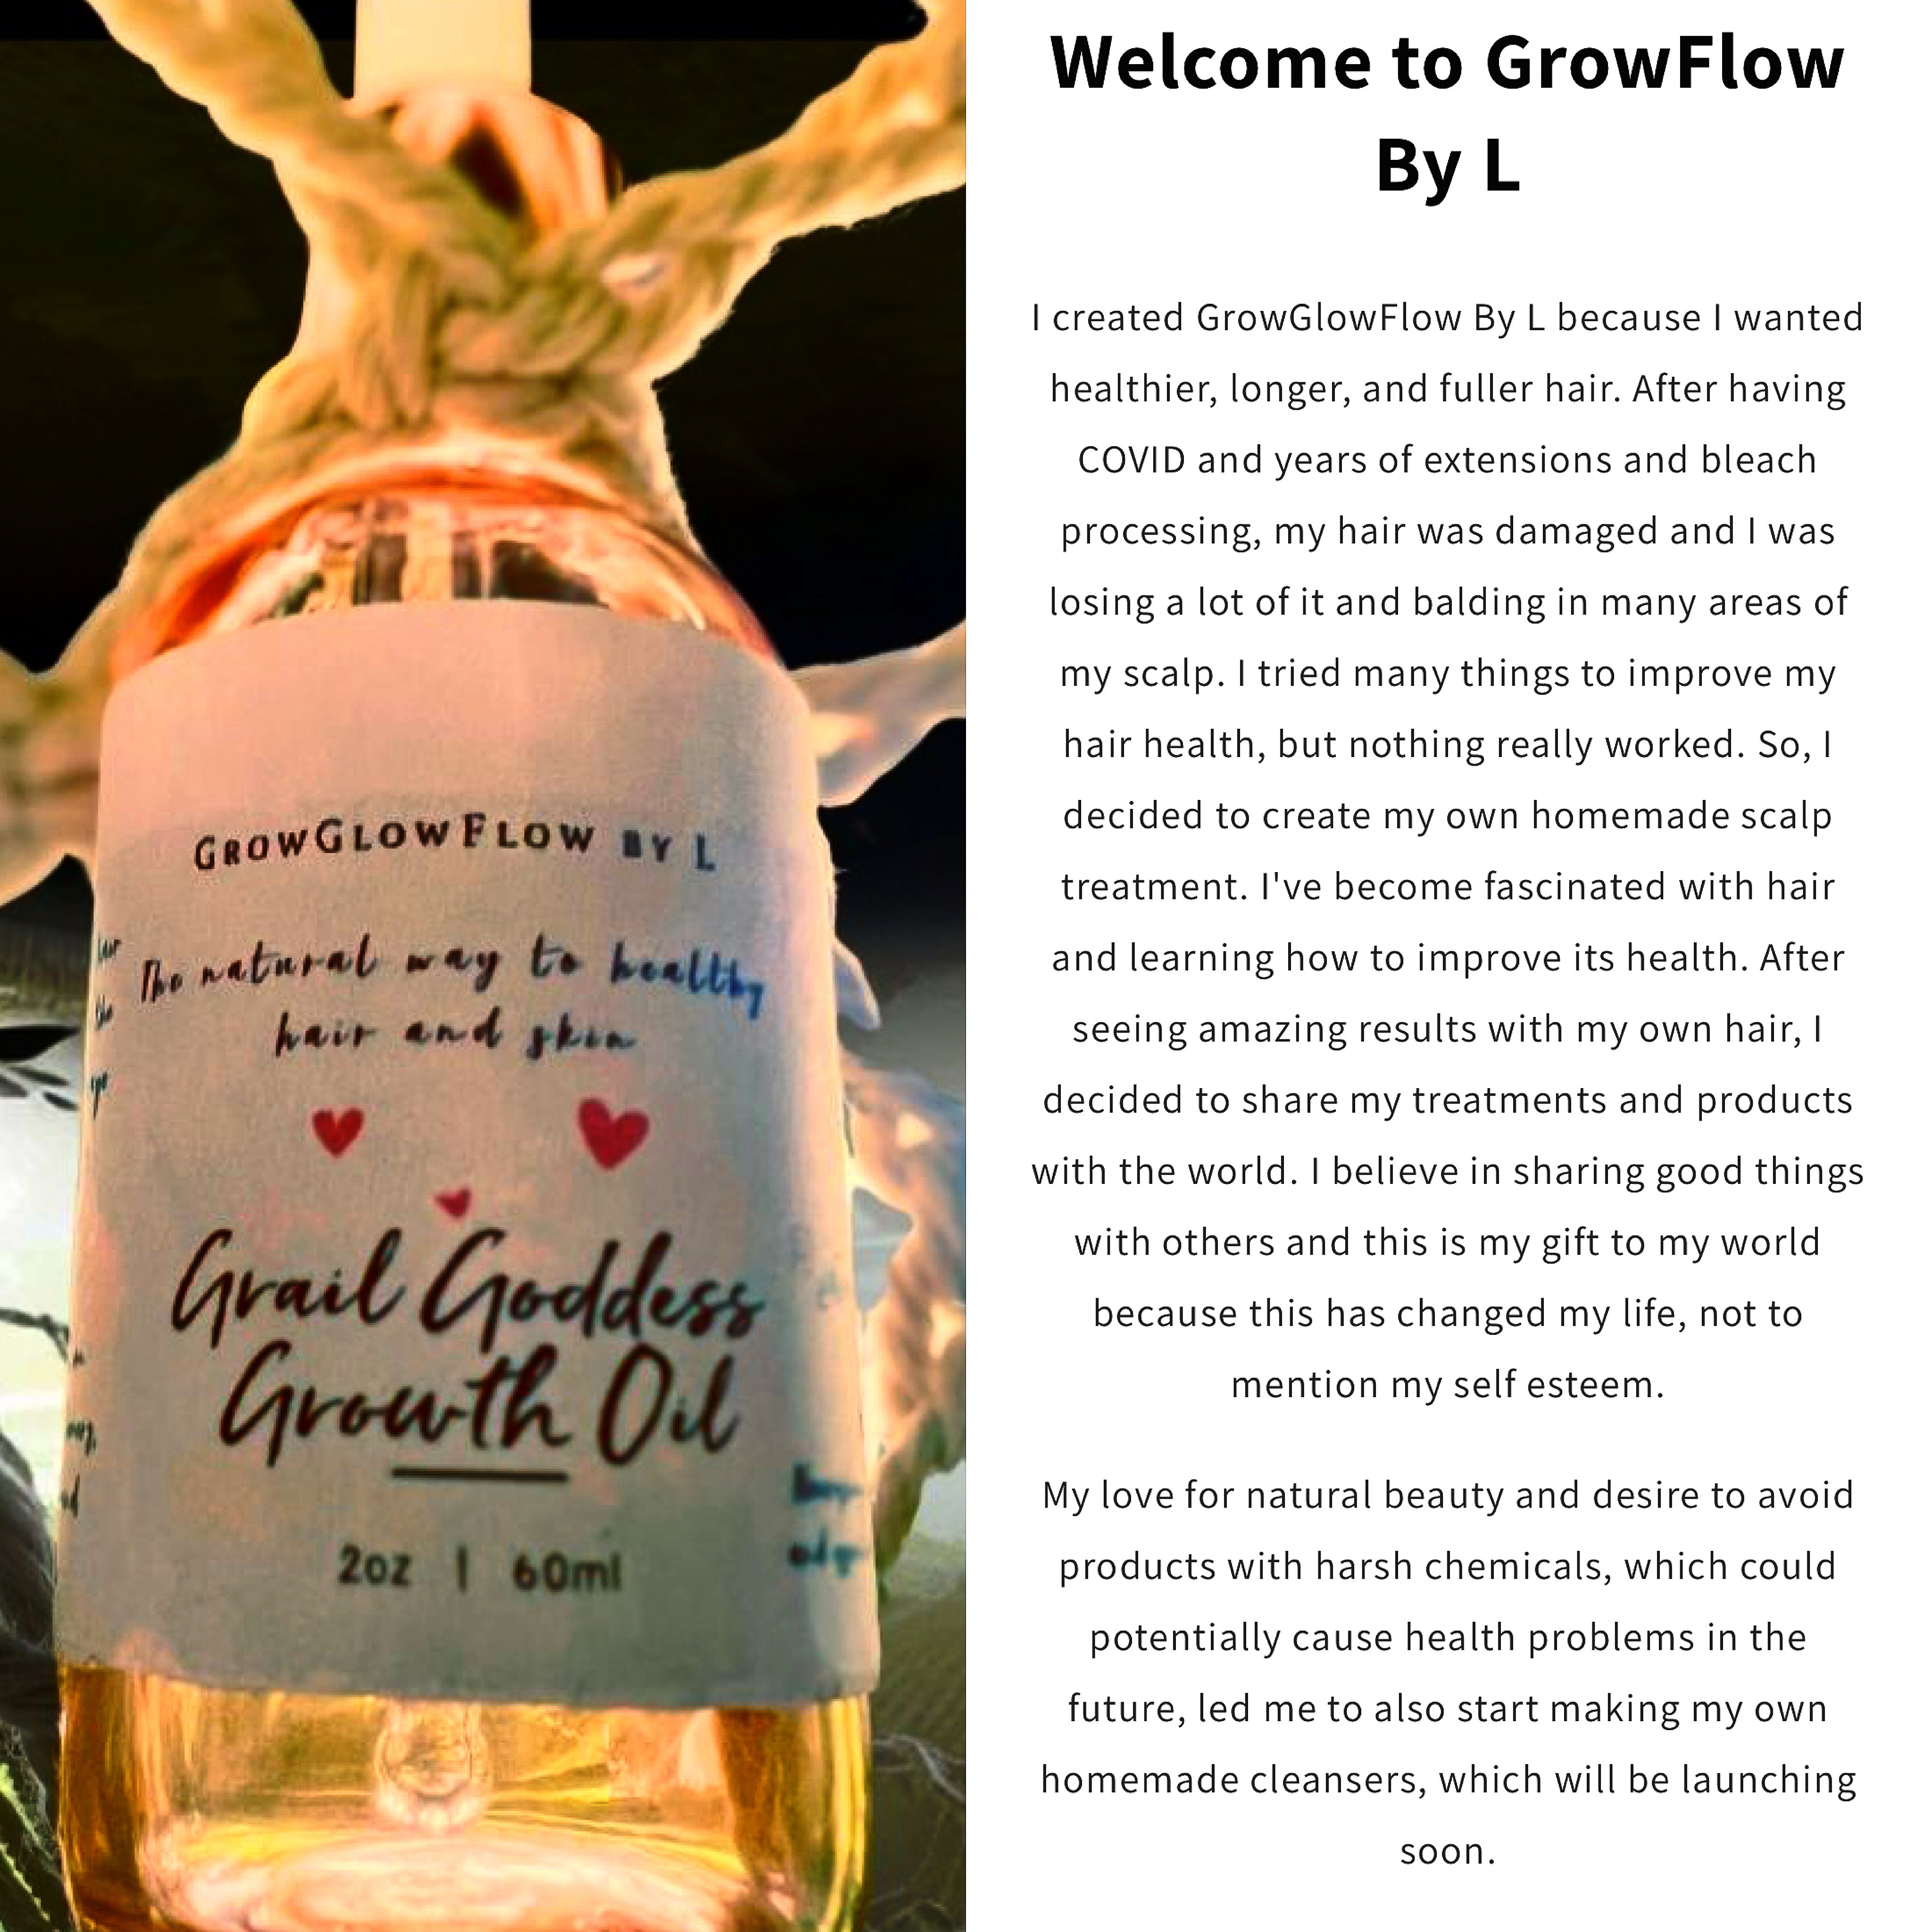 Grail Goddess with Hair Oil Applicator – GrowGlowFlow By L